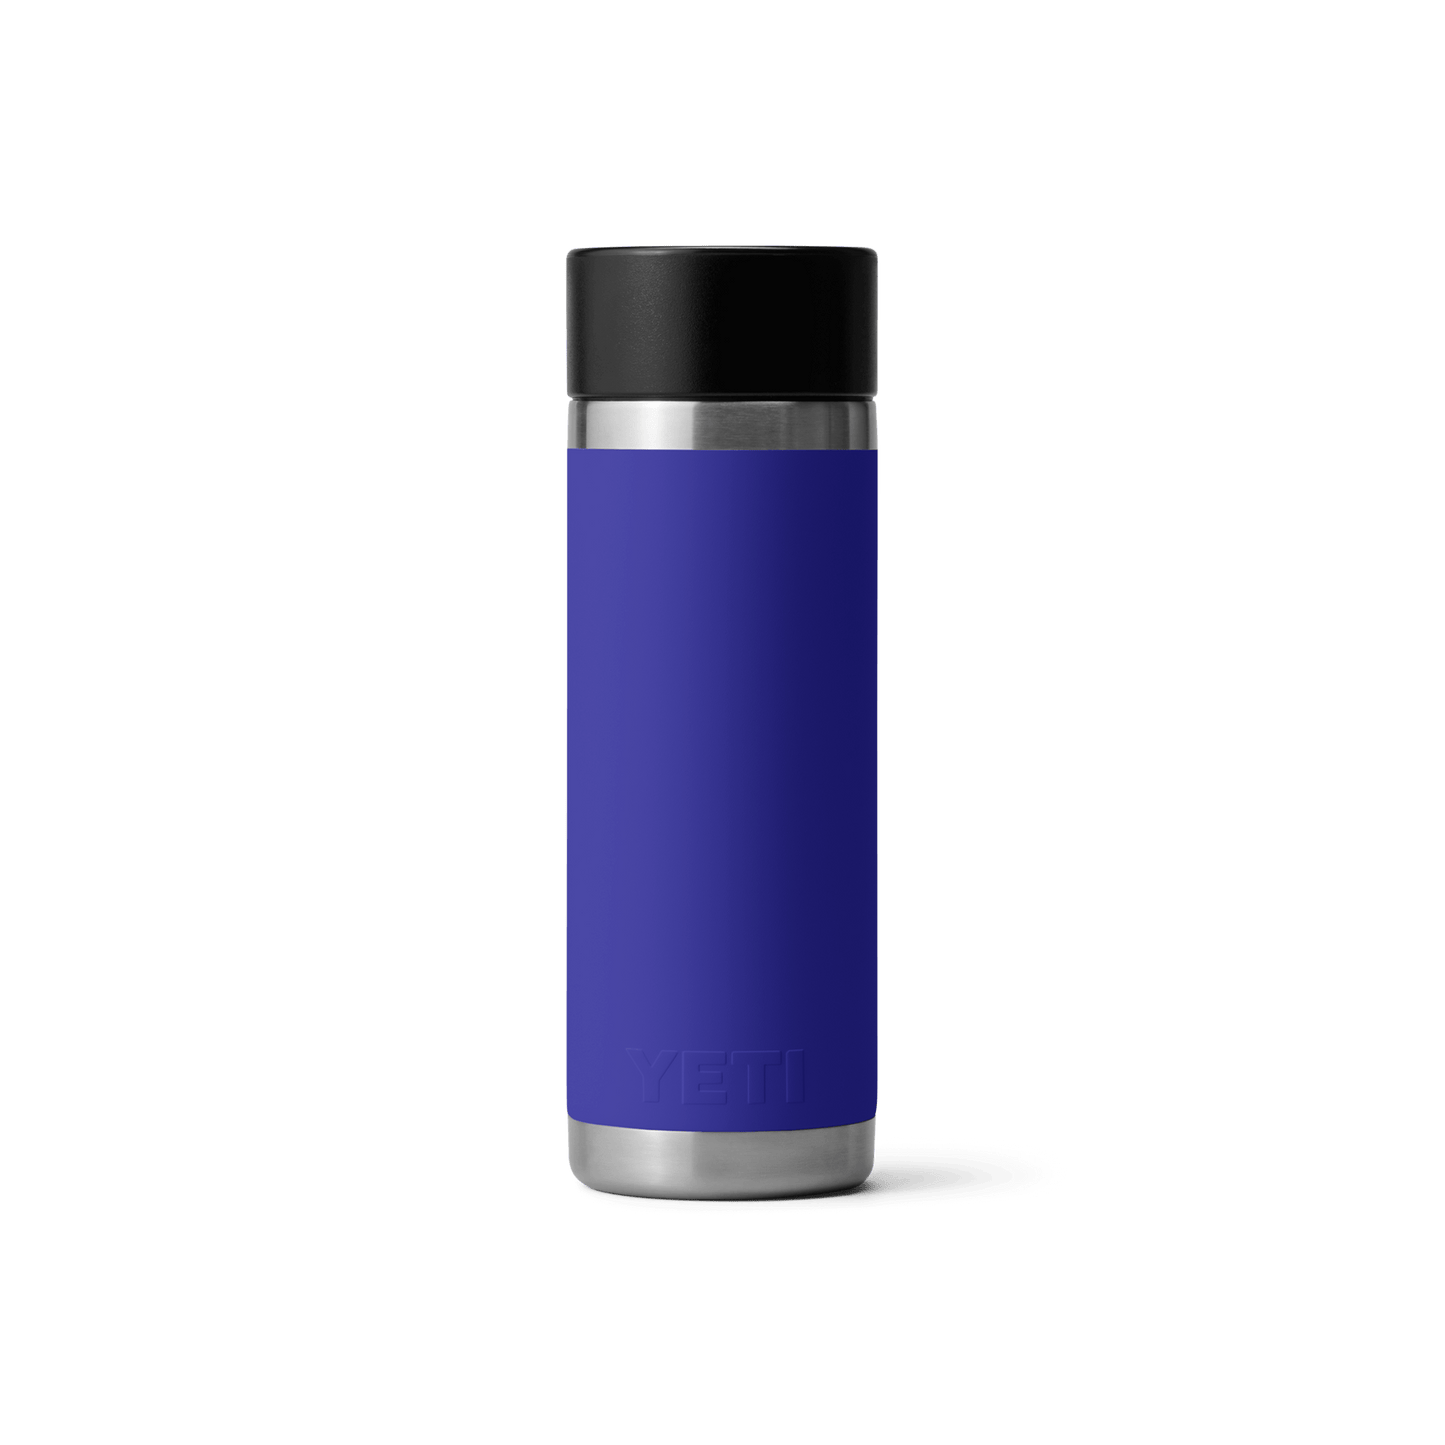 YETI Rambler® 18 oz (532 ml) Bottle With Hotshot Cap Offshore Blue